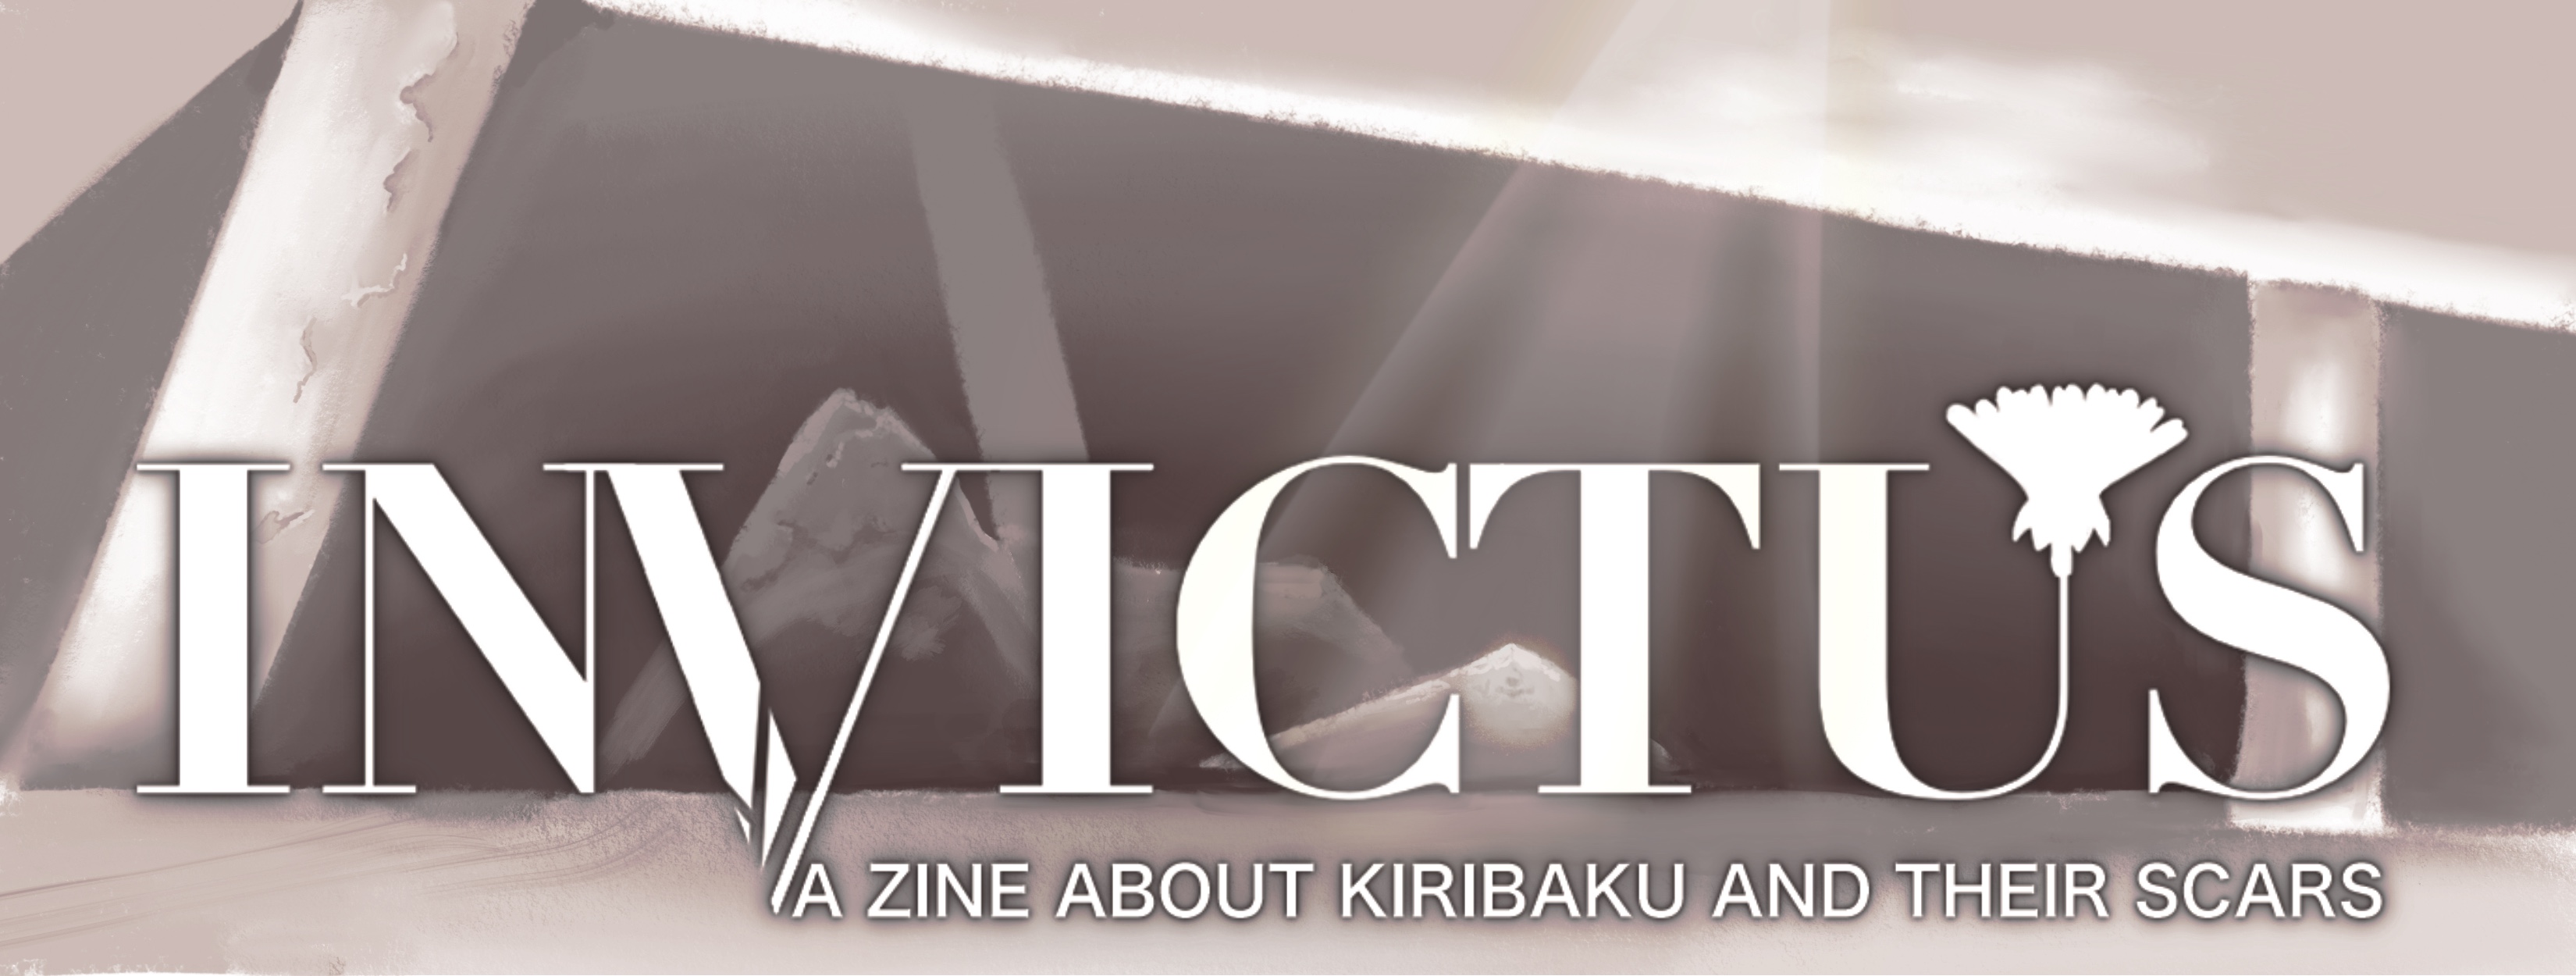 INVICTUS: A Zine about KiriBaku and their Scars